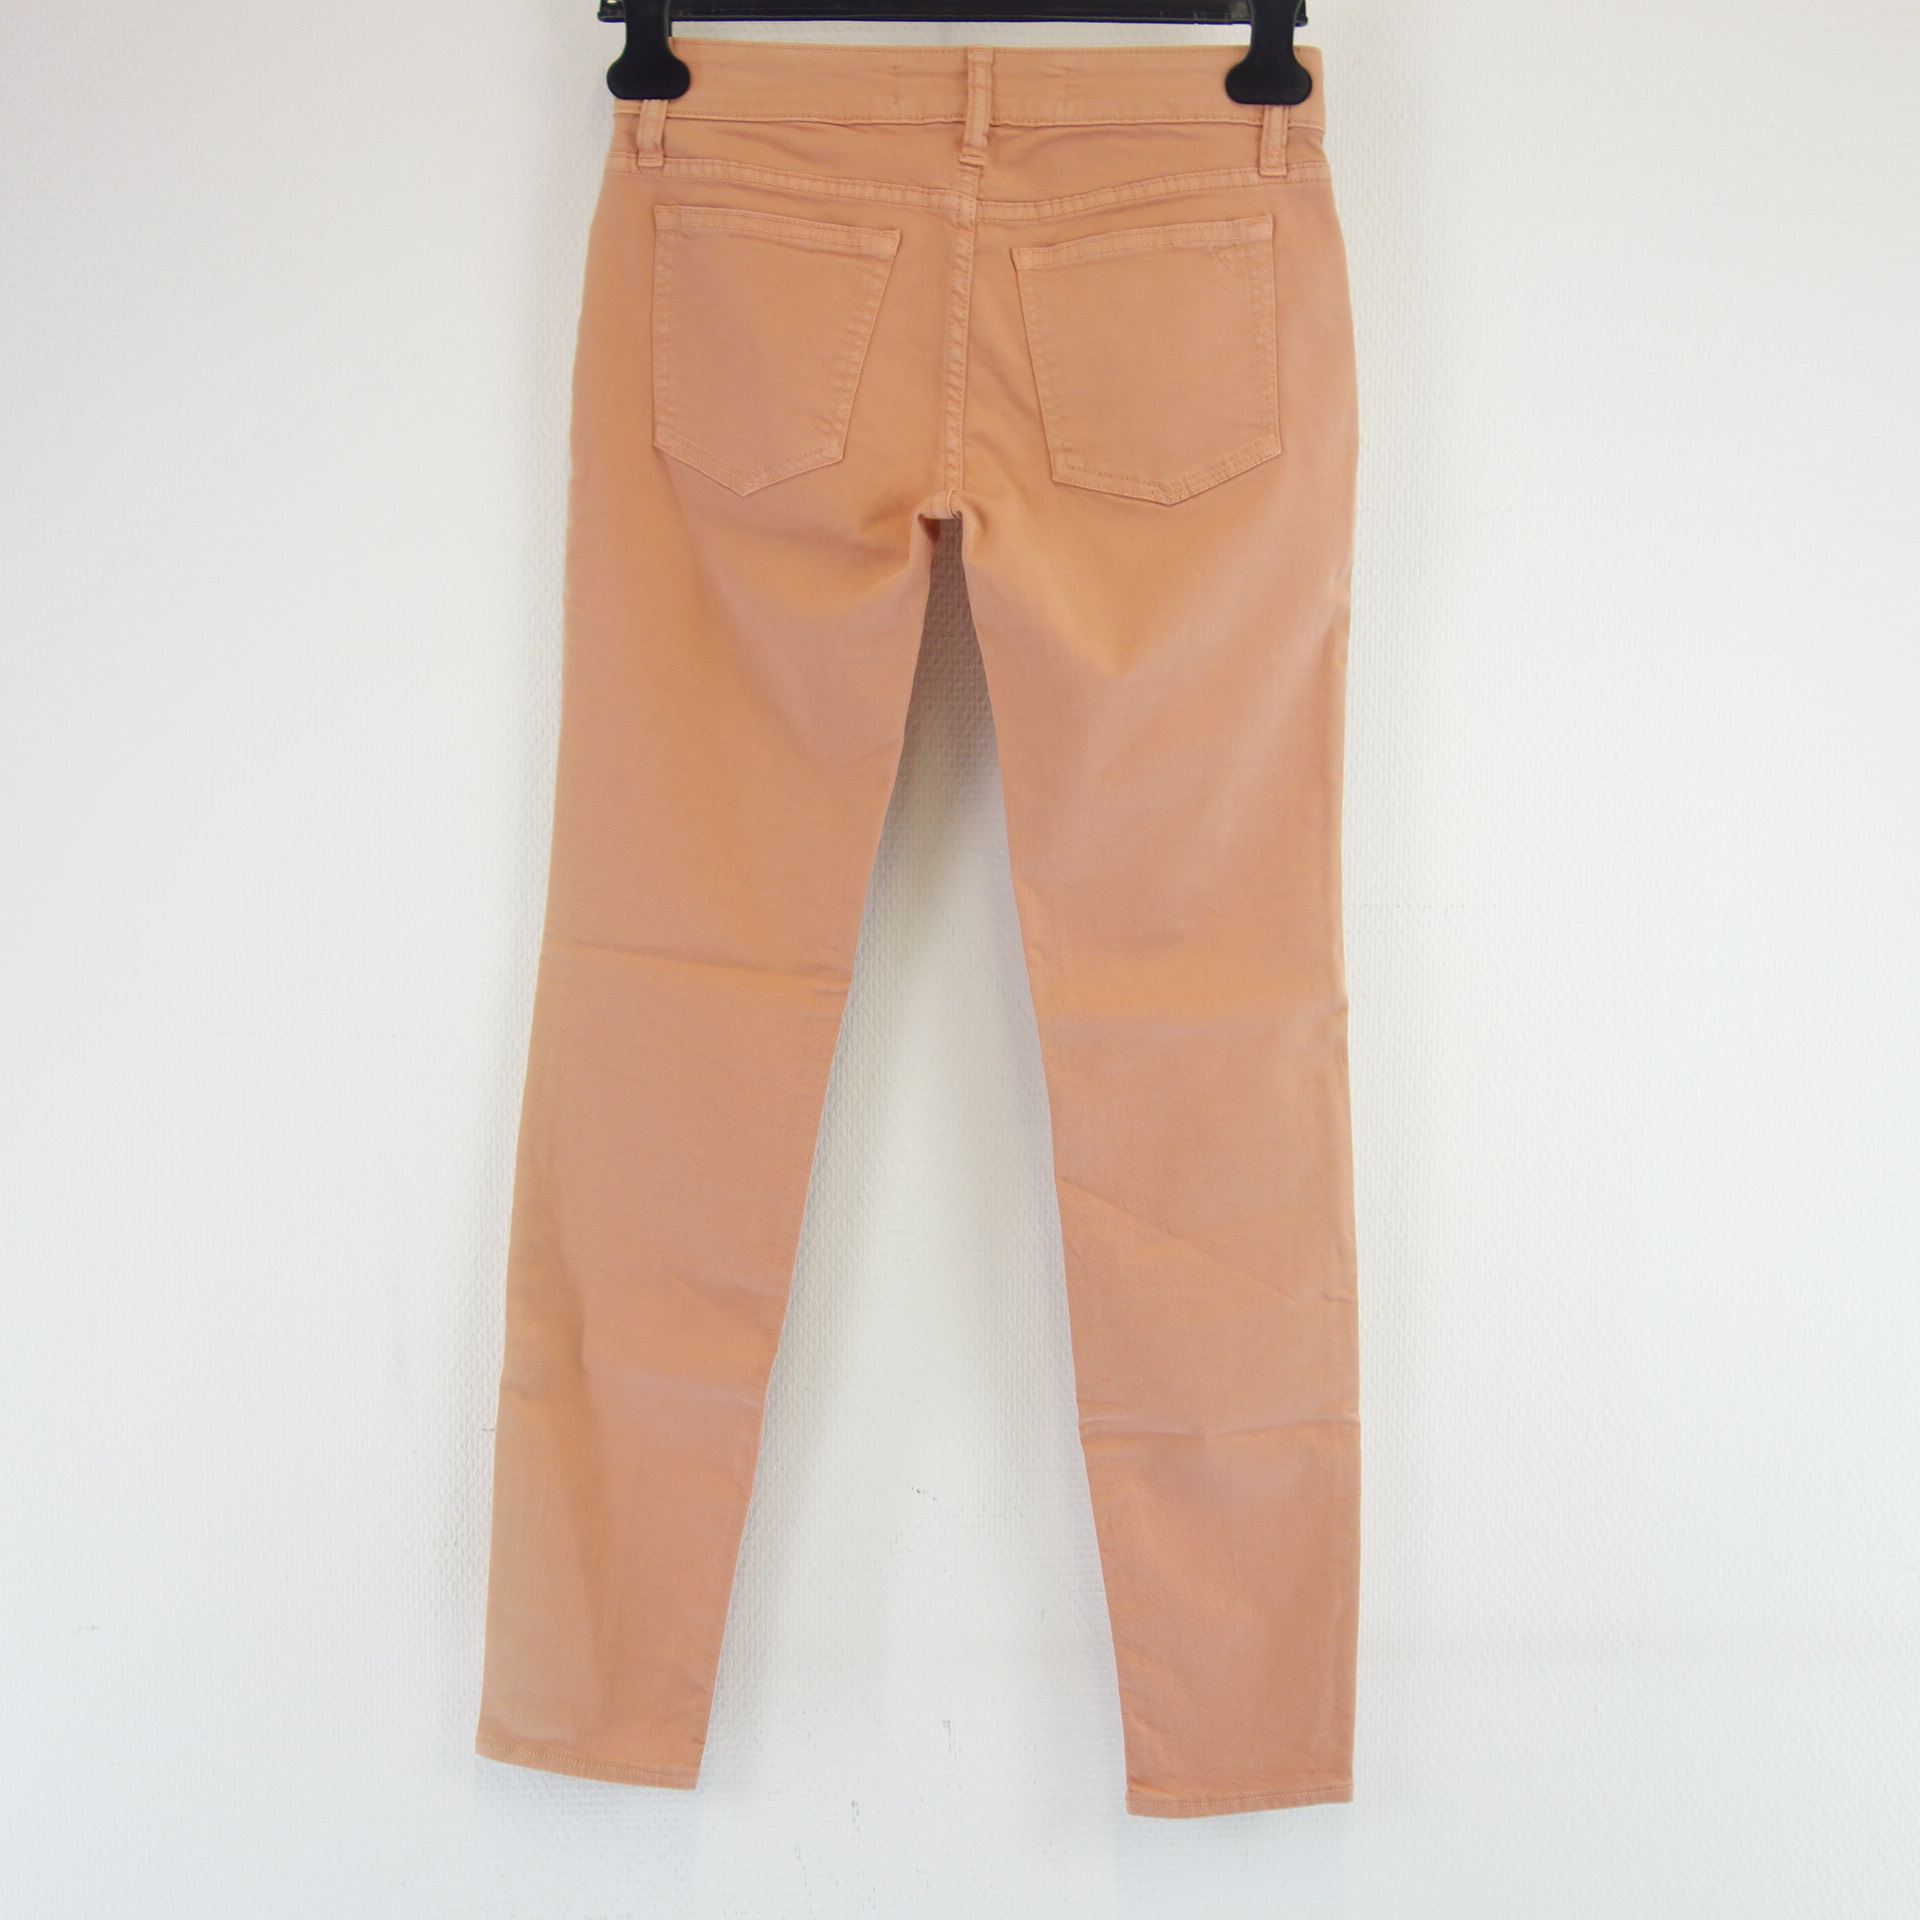 DRYKORN Damen Jeans Hose Jeanshose Apricot Slim Fit Straight Gr 26 ( 25 ) 